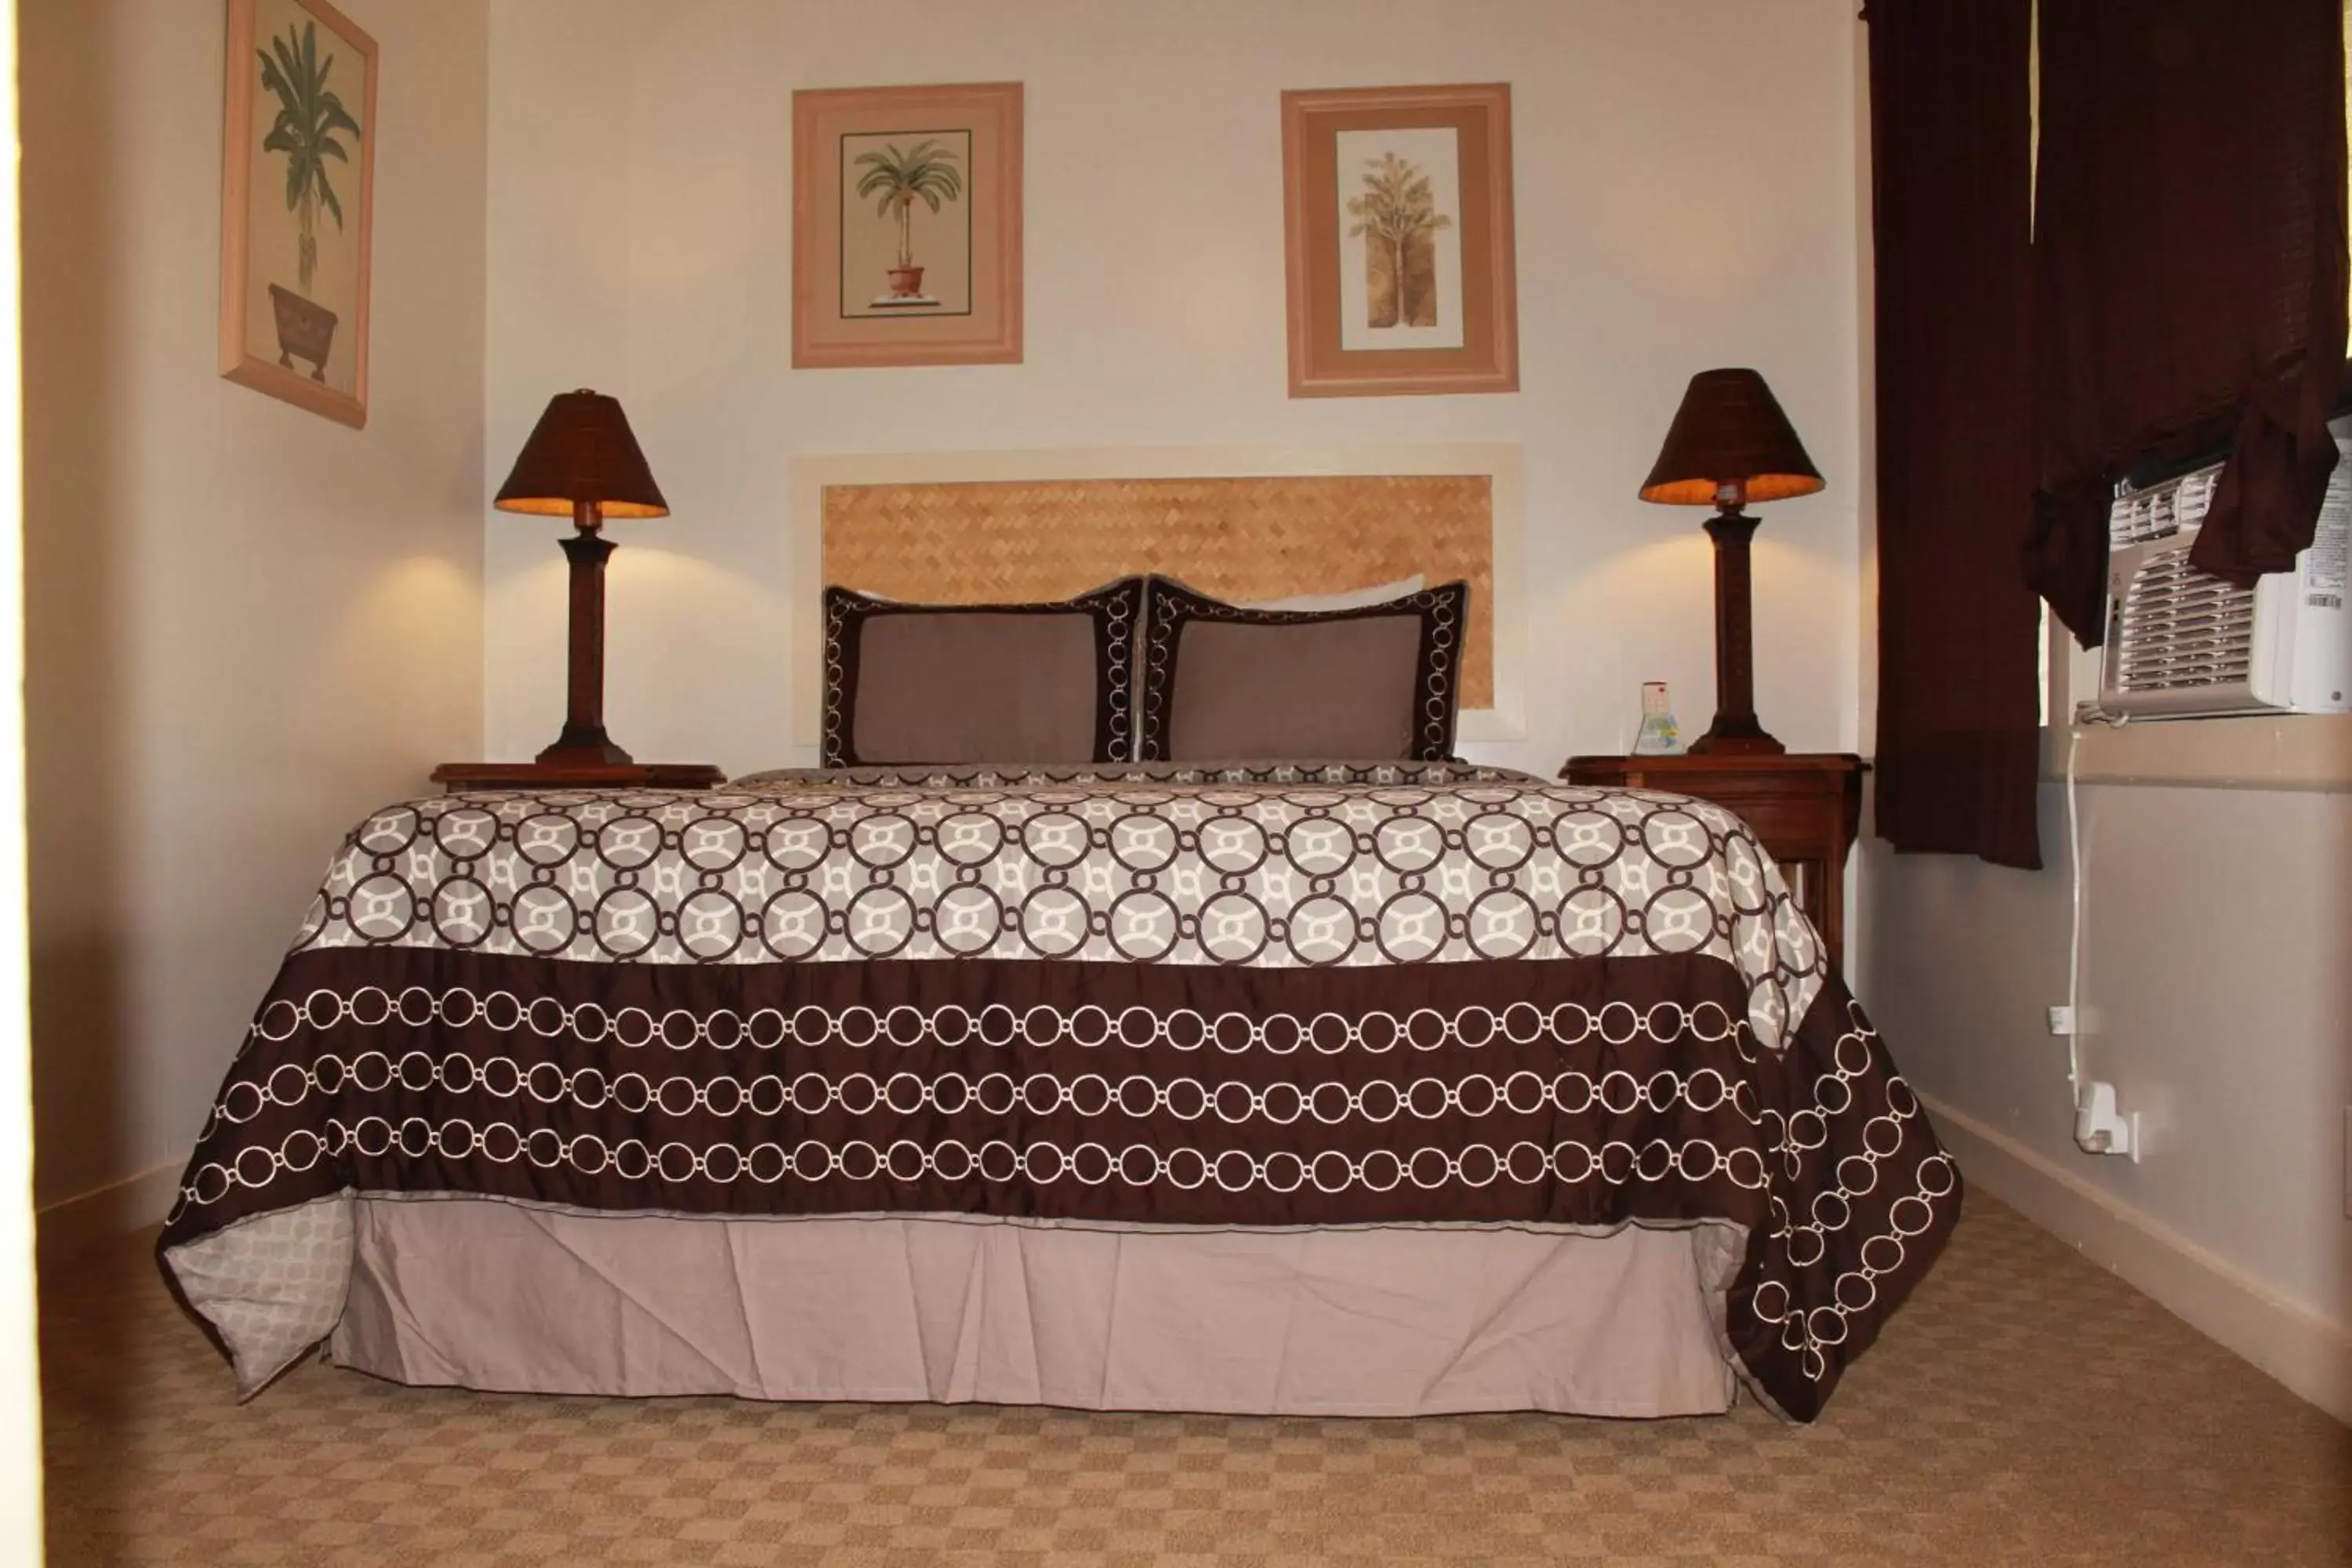 Bed in Kauai Palms Hotel